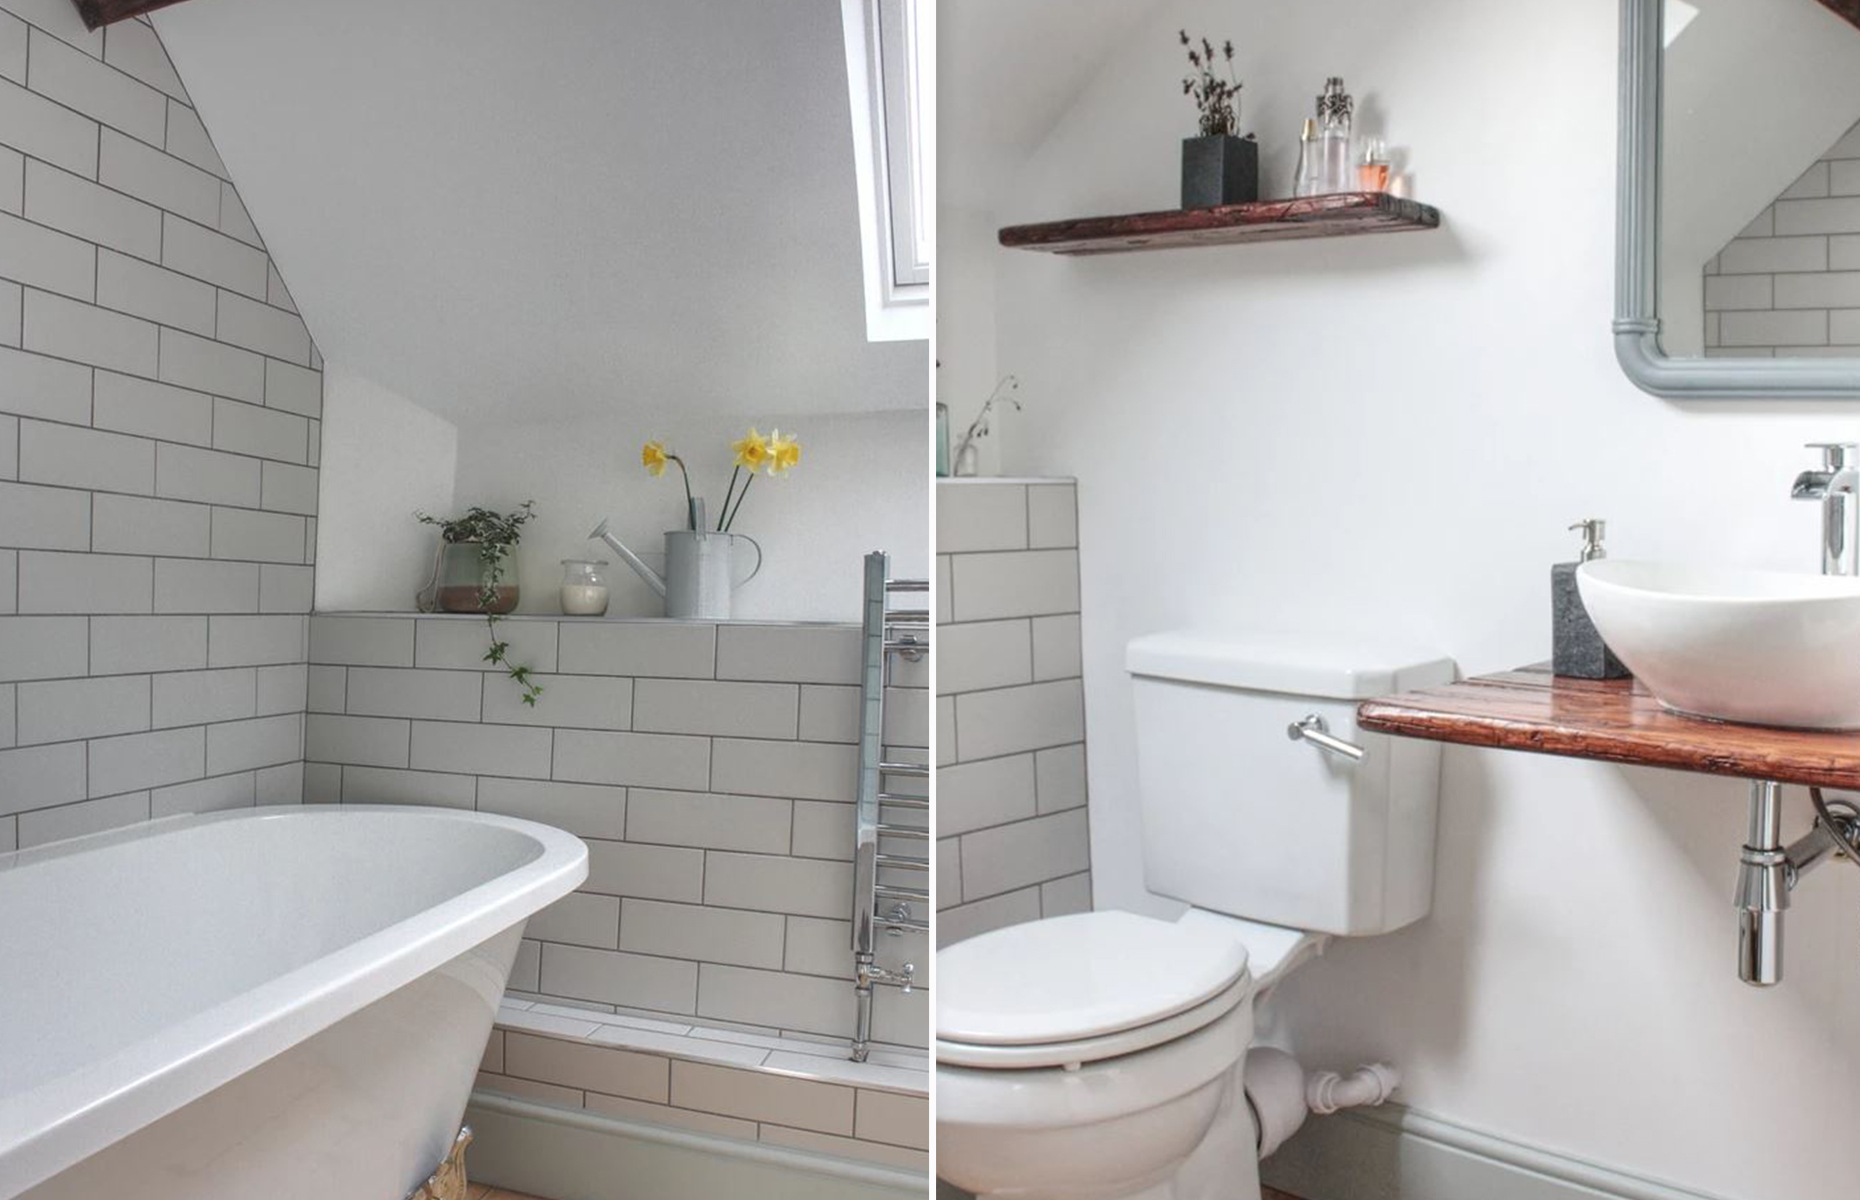 Luxury fixtures elevate this snug bathroom. Image: Cwellyn Dream